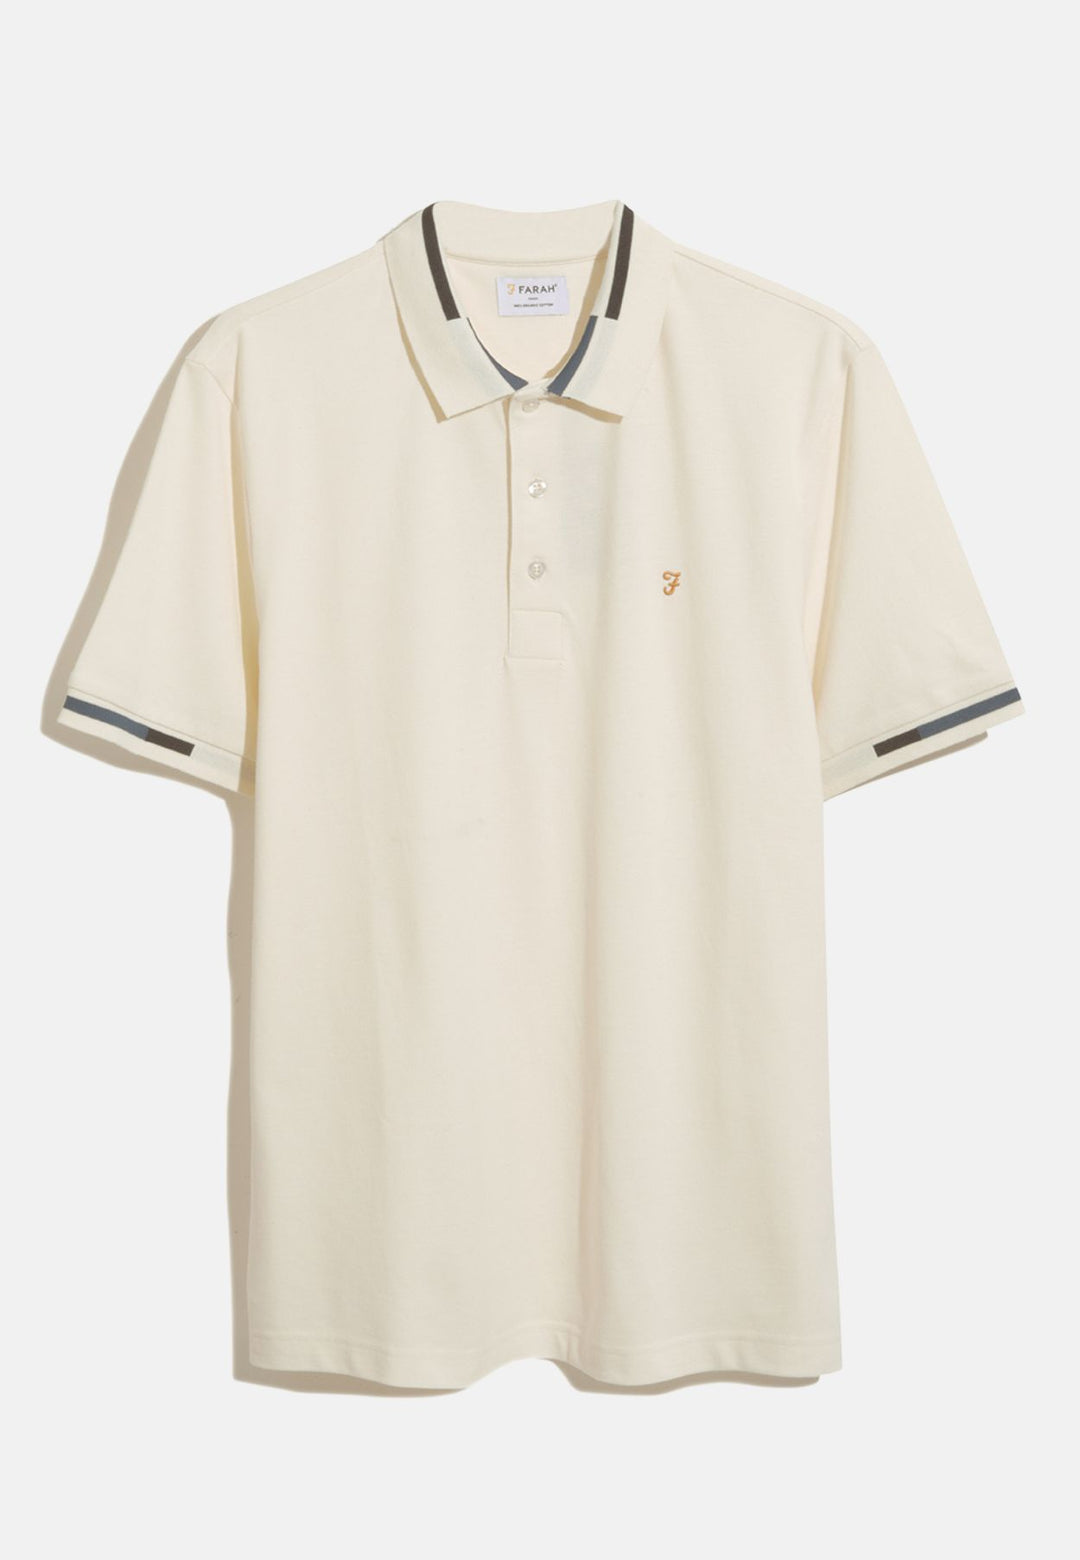 Men's Farah Maxwell Tipping Polo Shirt in Cream